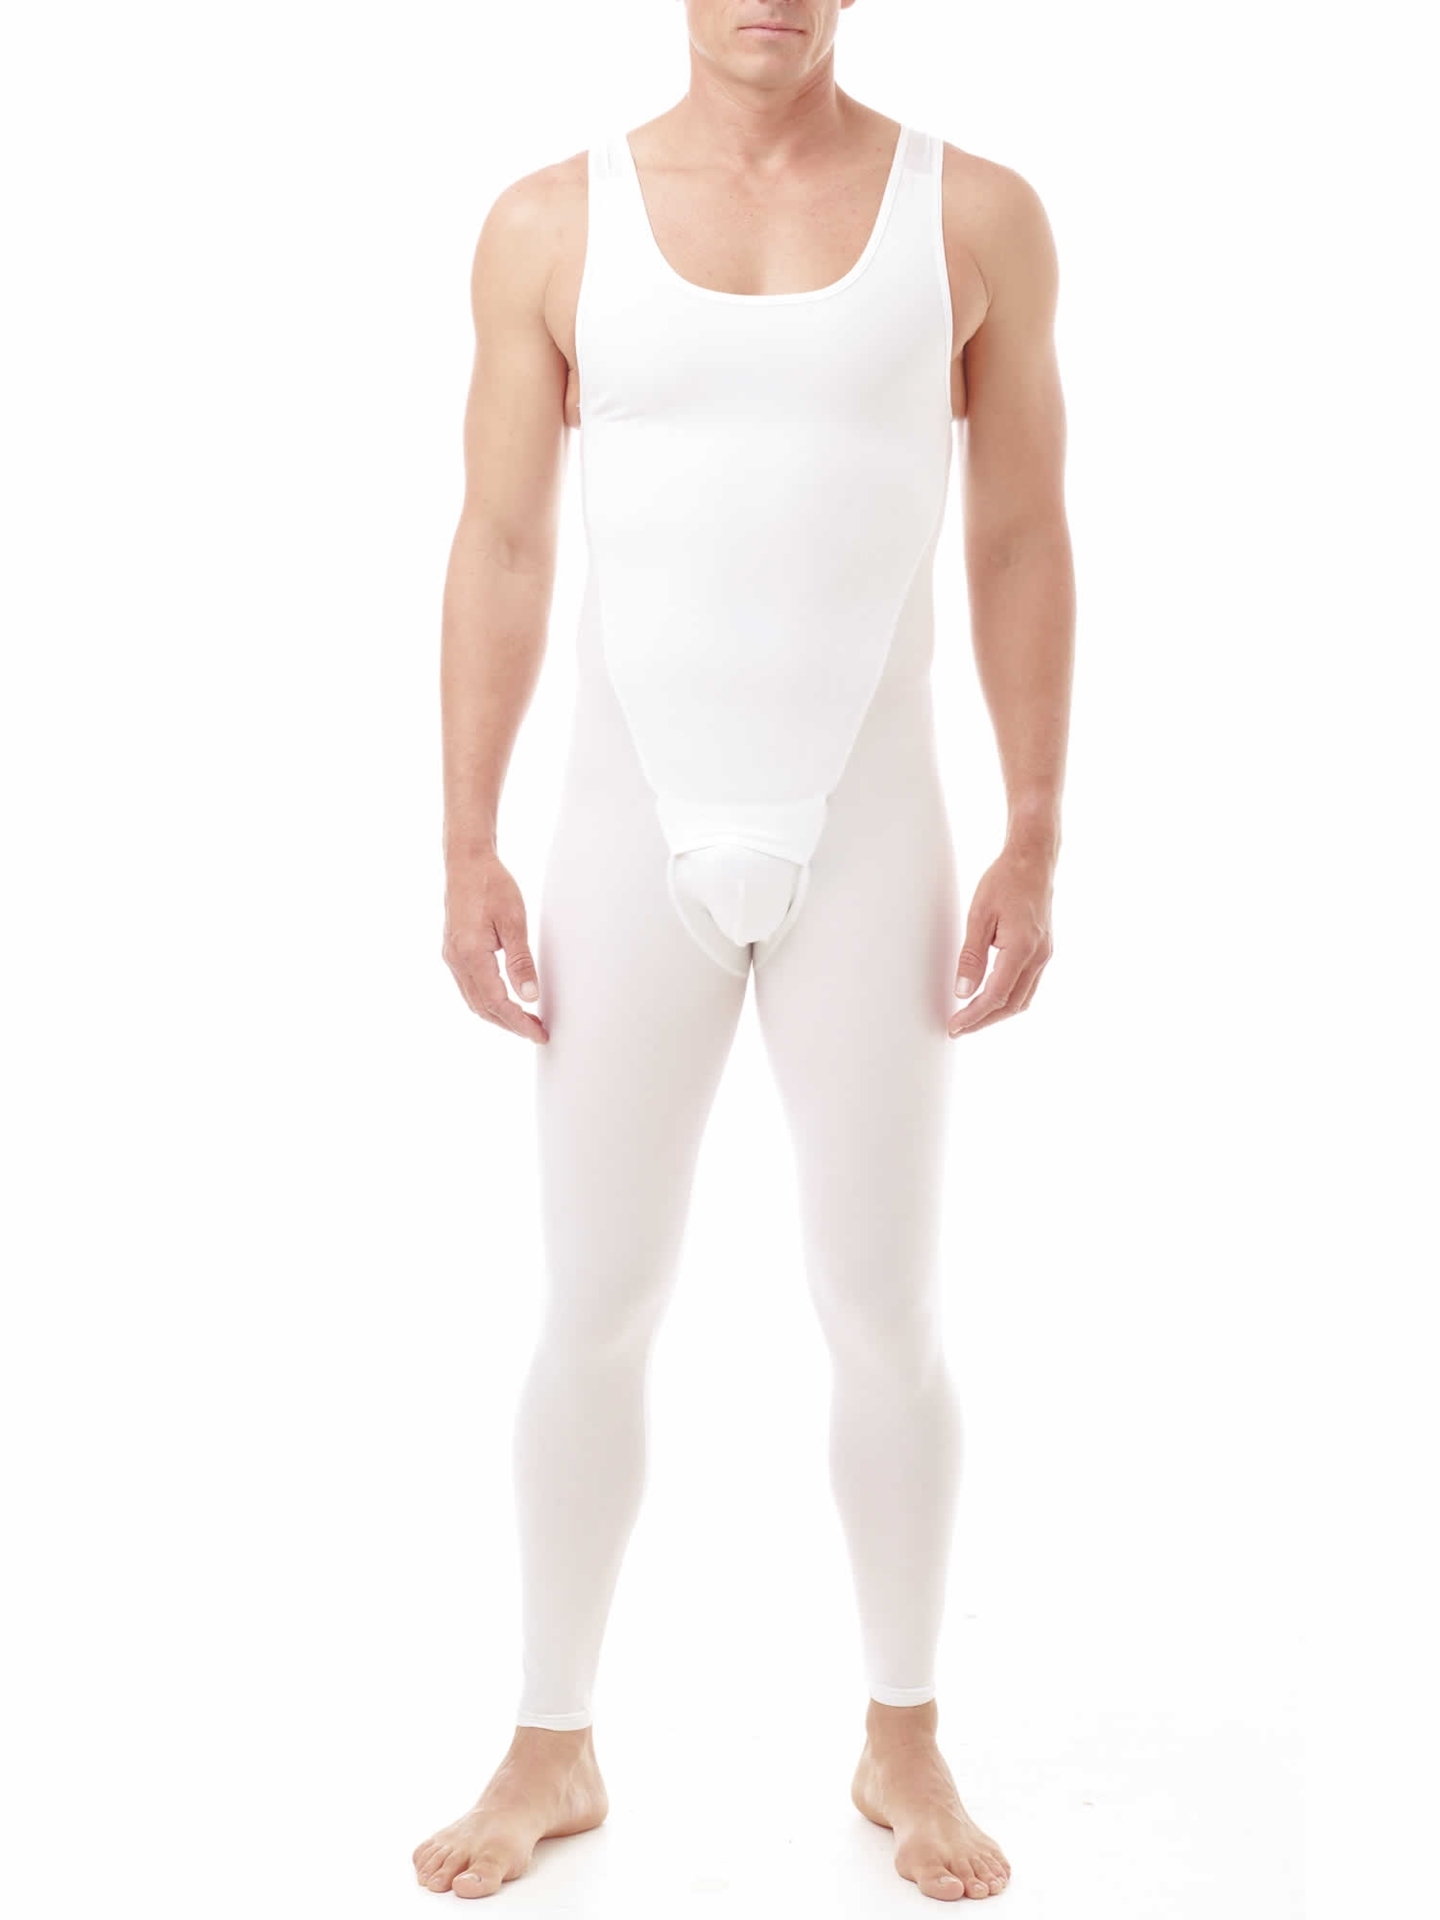 Underworks Mens Compression Bodysuit Girdle - White - S